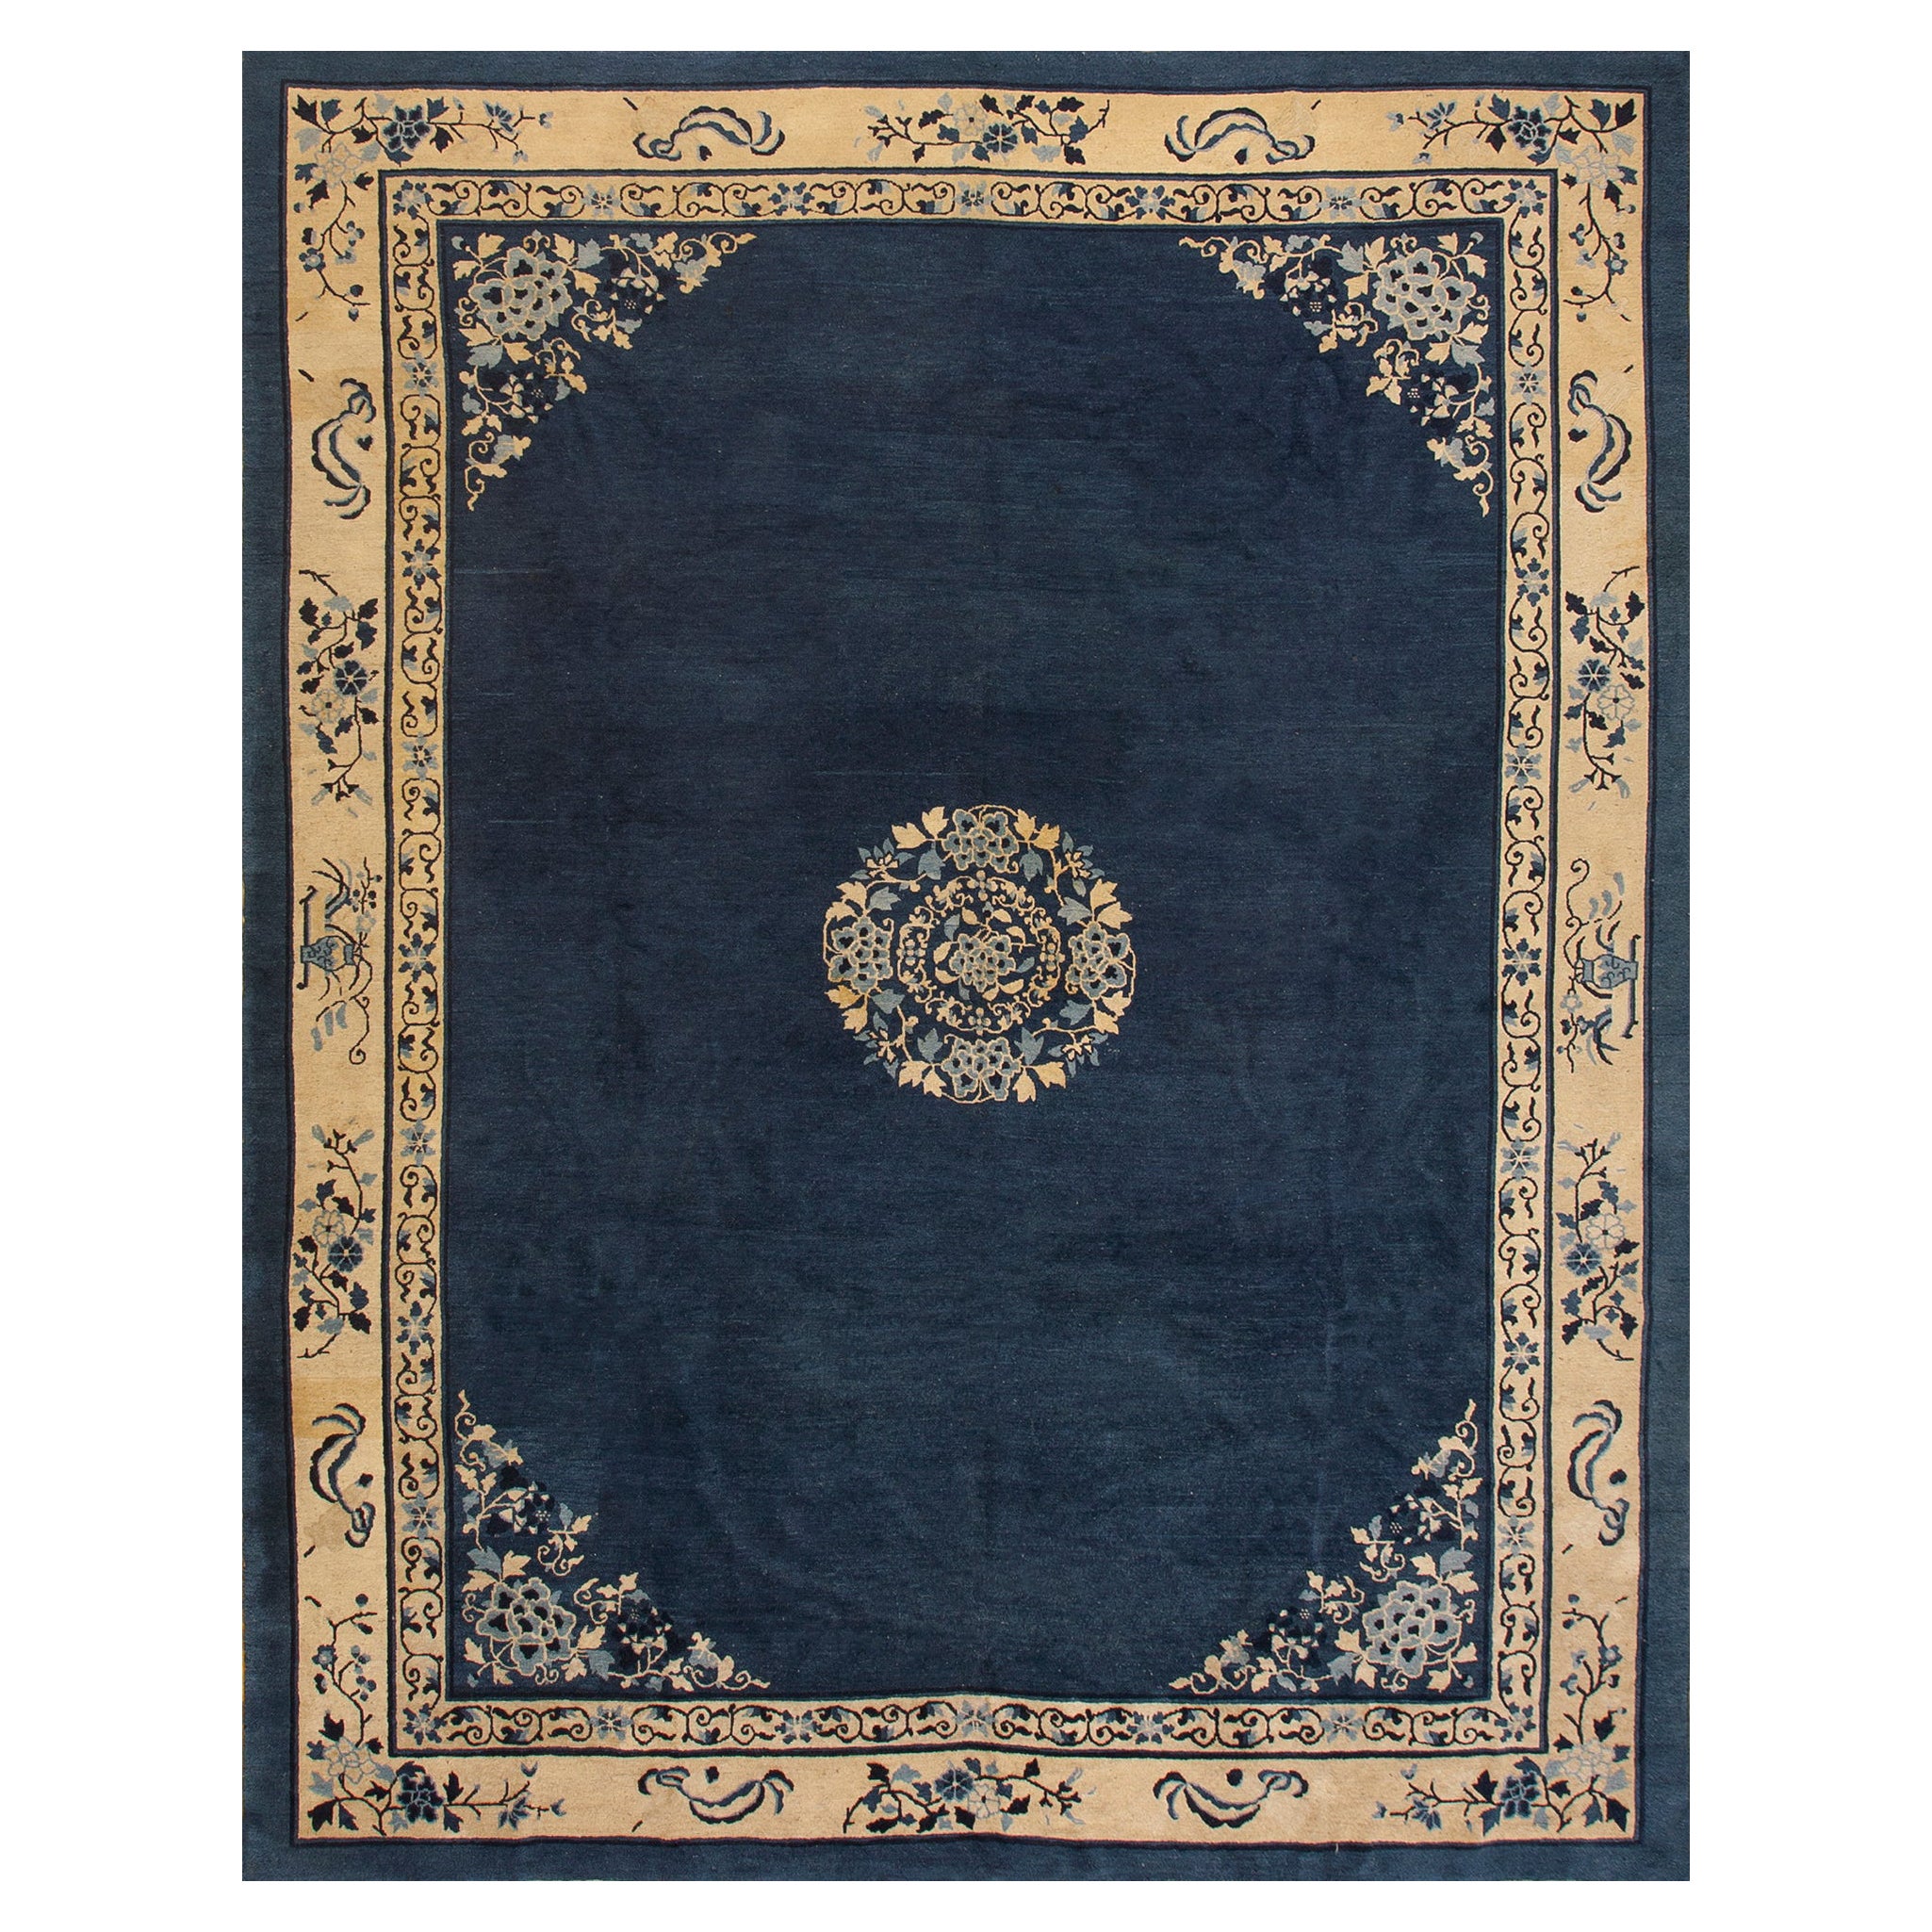 Early 20th Century Chinese Peking Carpet ( 9'2'' x 11'8'' - 279 x 356 )